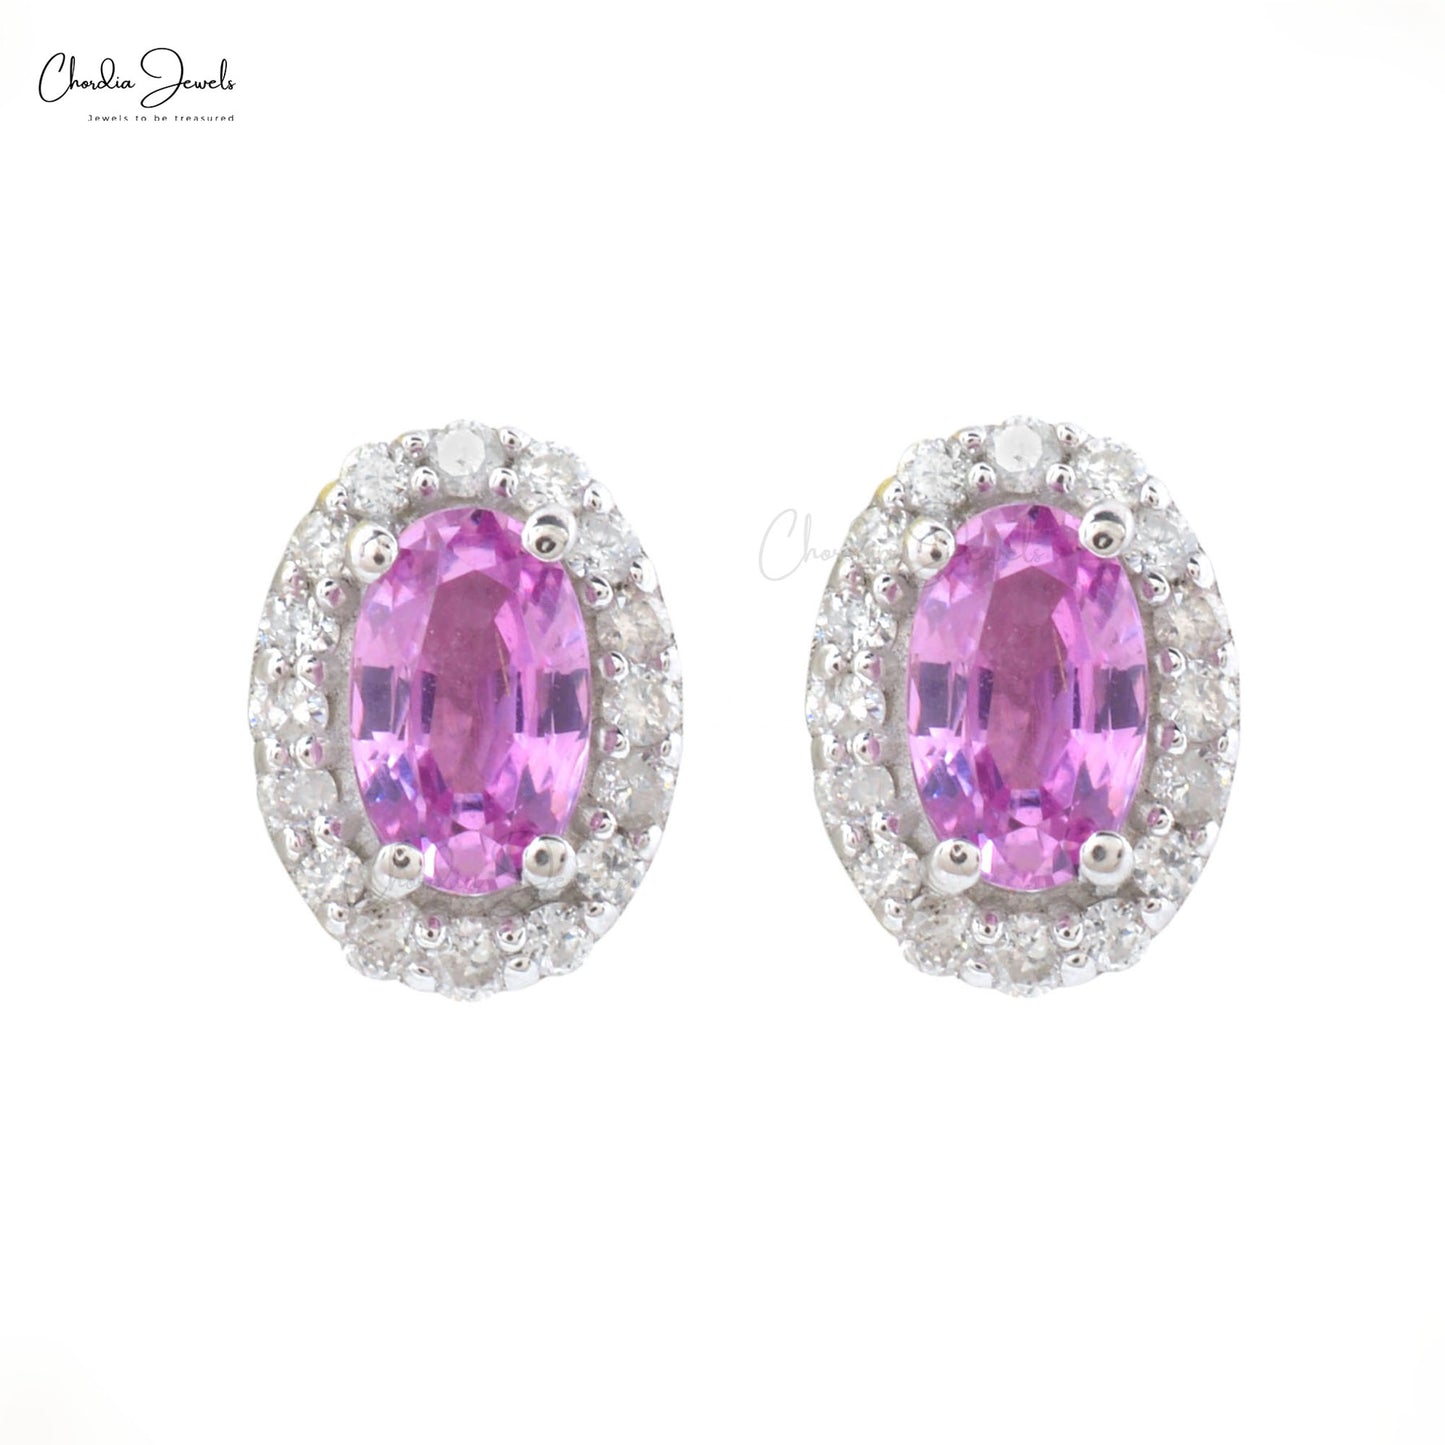 Natural Pink Sapphire Dainty Earrings 14k Solid White Gold Diamond Push Back Earrings 5x3mm Oval Cut Gemstone Halo Earrings For Women's